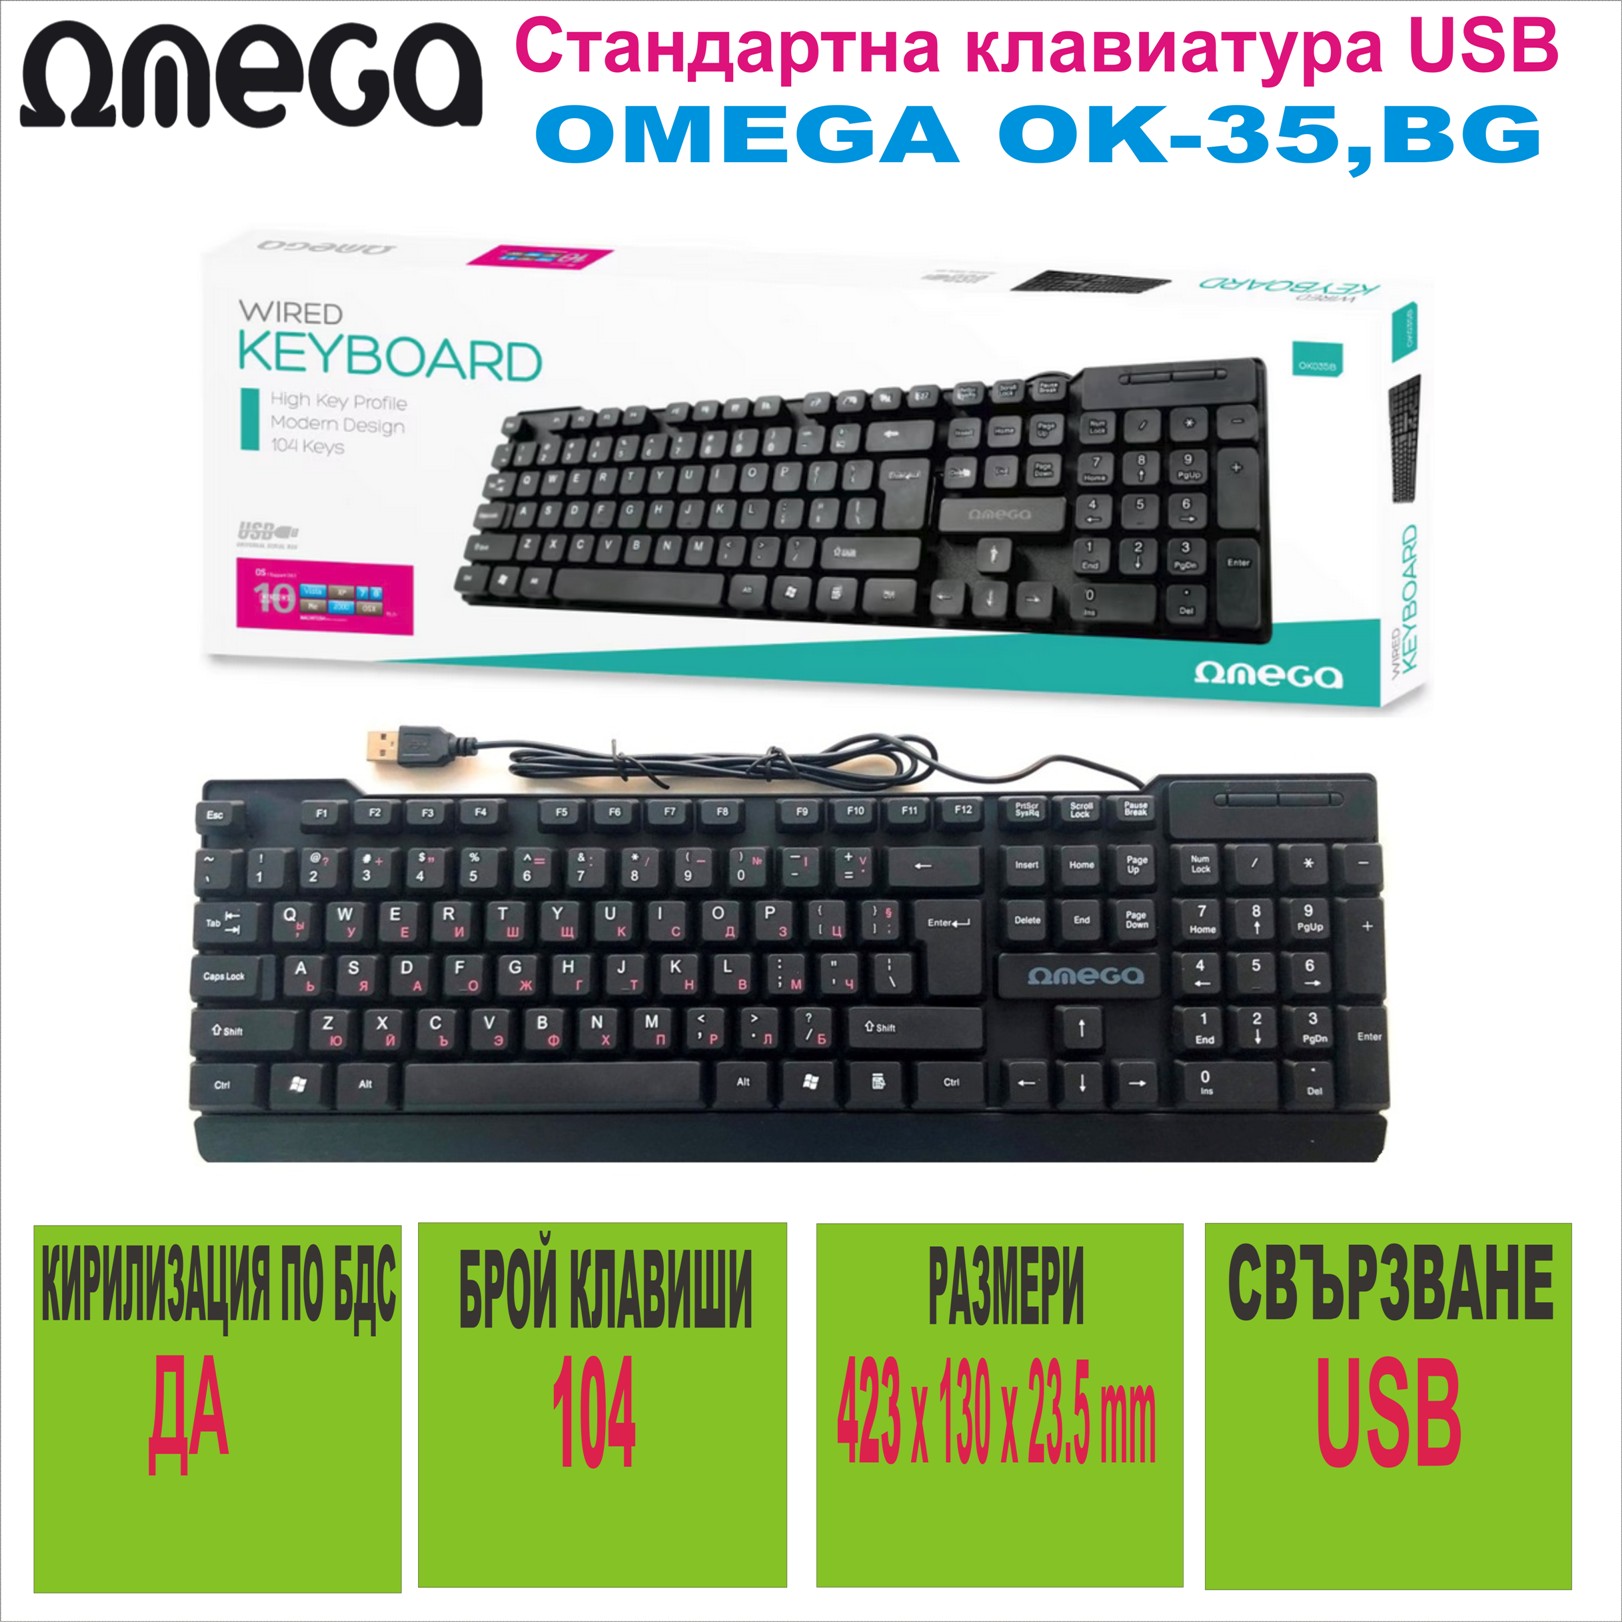 Стандартна клавиатура USB OMEGA OK-35,BG